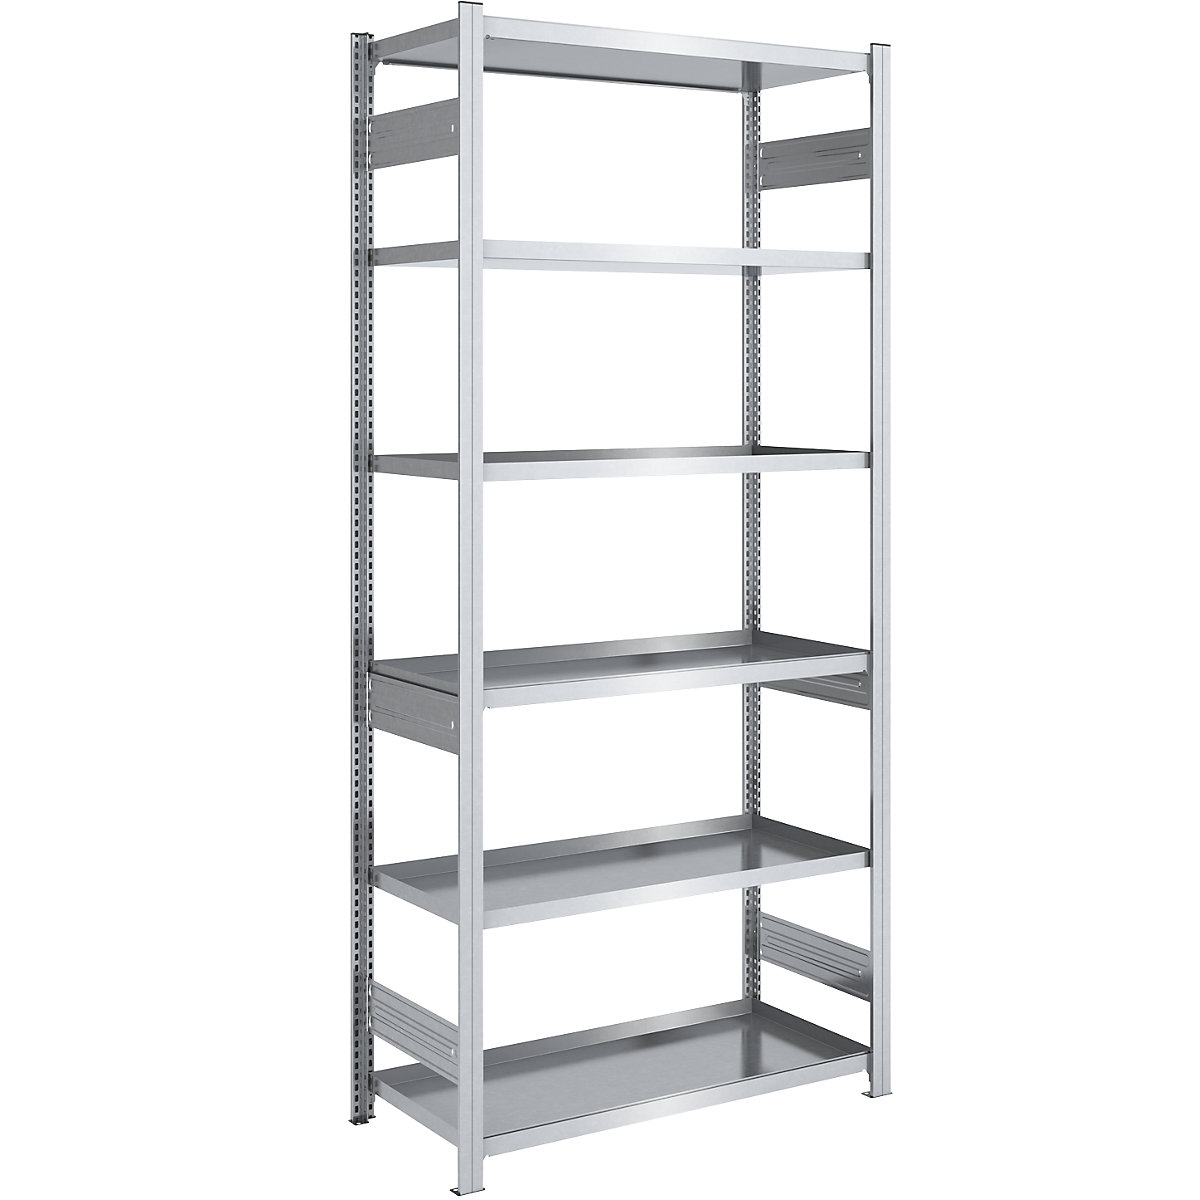 Tray shelf unit – hofe, shelf unit height 2500 mm, tray width 1000 mm, tray depth 600 mm, standard shelf unit